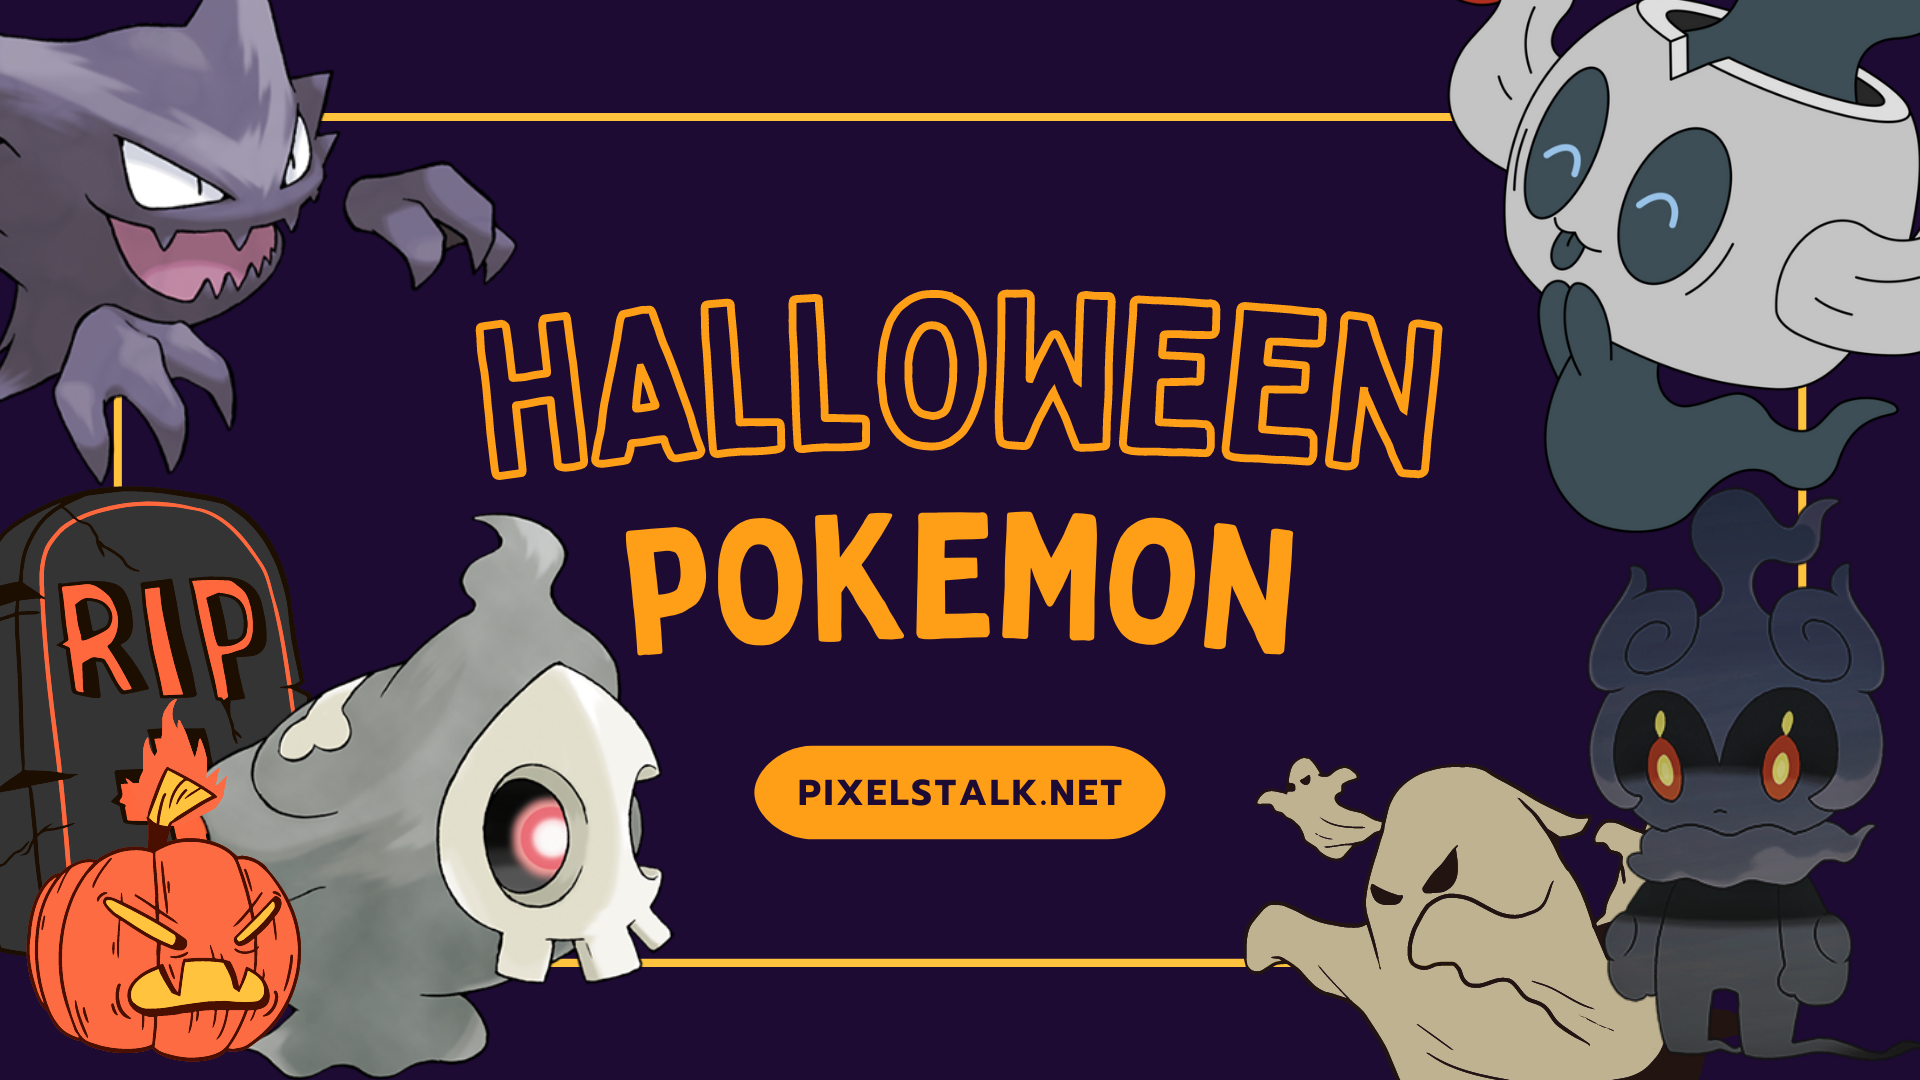 Pokemon Halloween Wallpapers for Desktop, PC and Mobile 